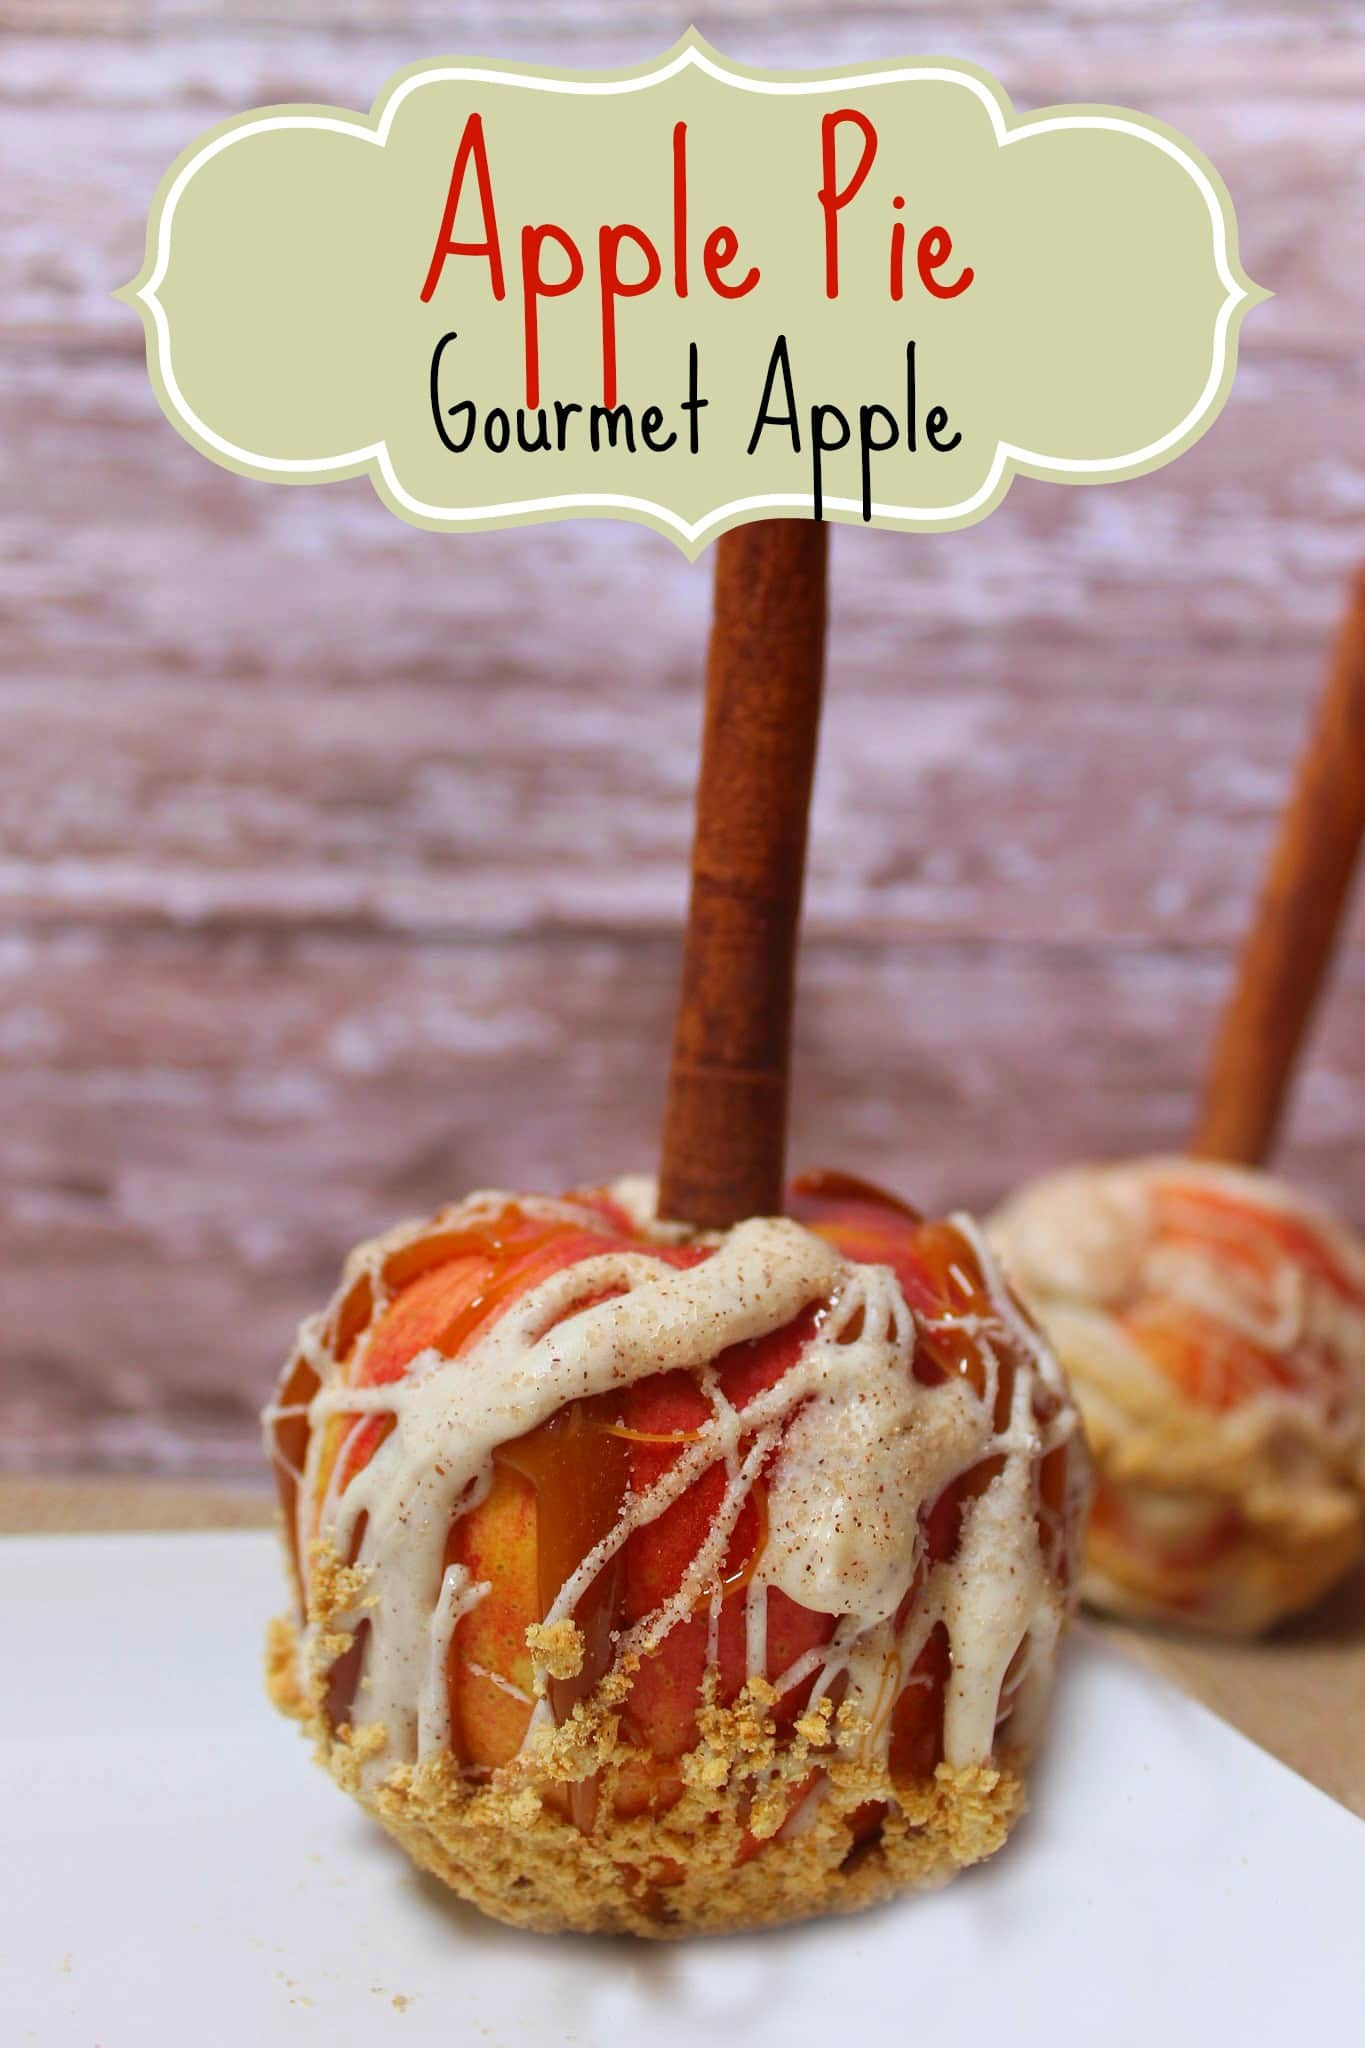 Gourmet Candy Apple Recipes
 Apple Pie Caramel Apple A Gourmet Caramel Apple Recipe